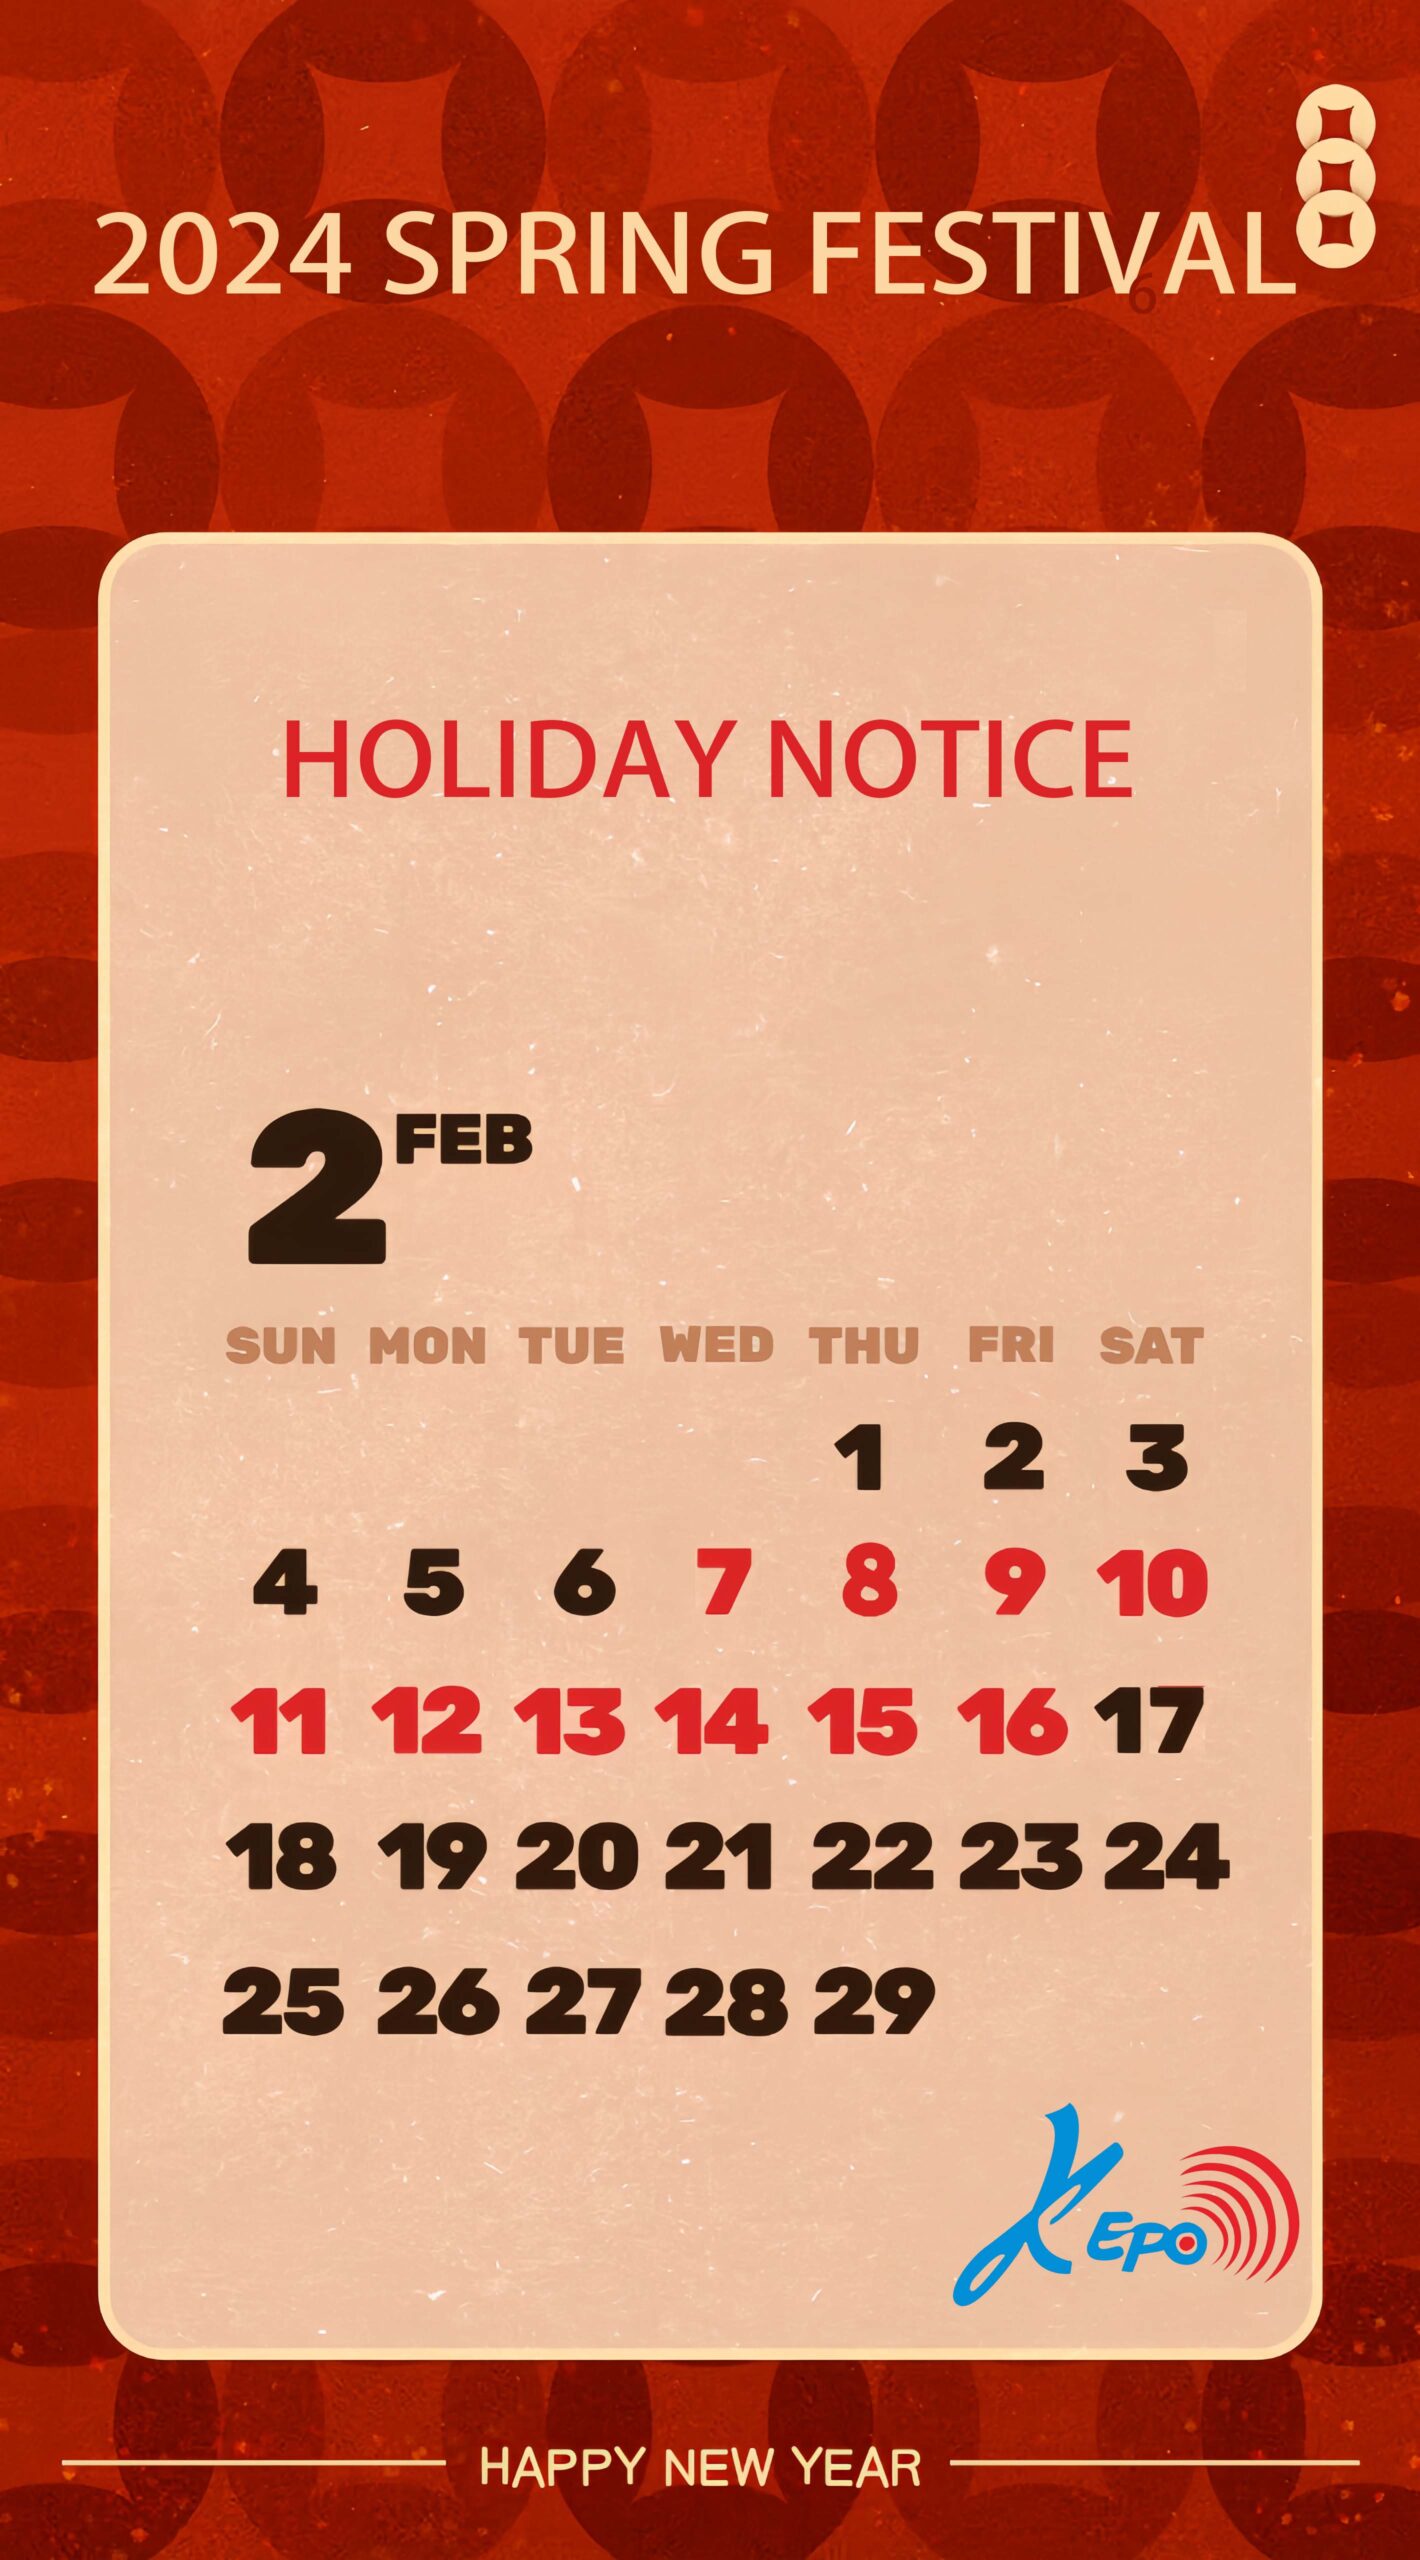 Holiday Notice 2024 Spring Festival